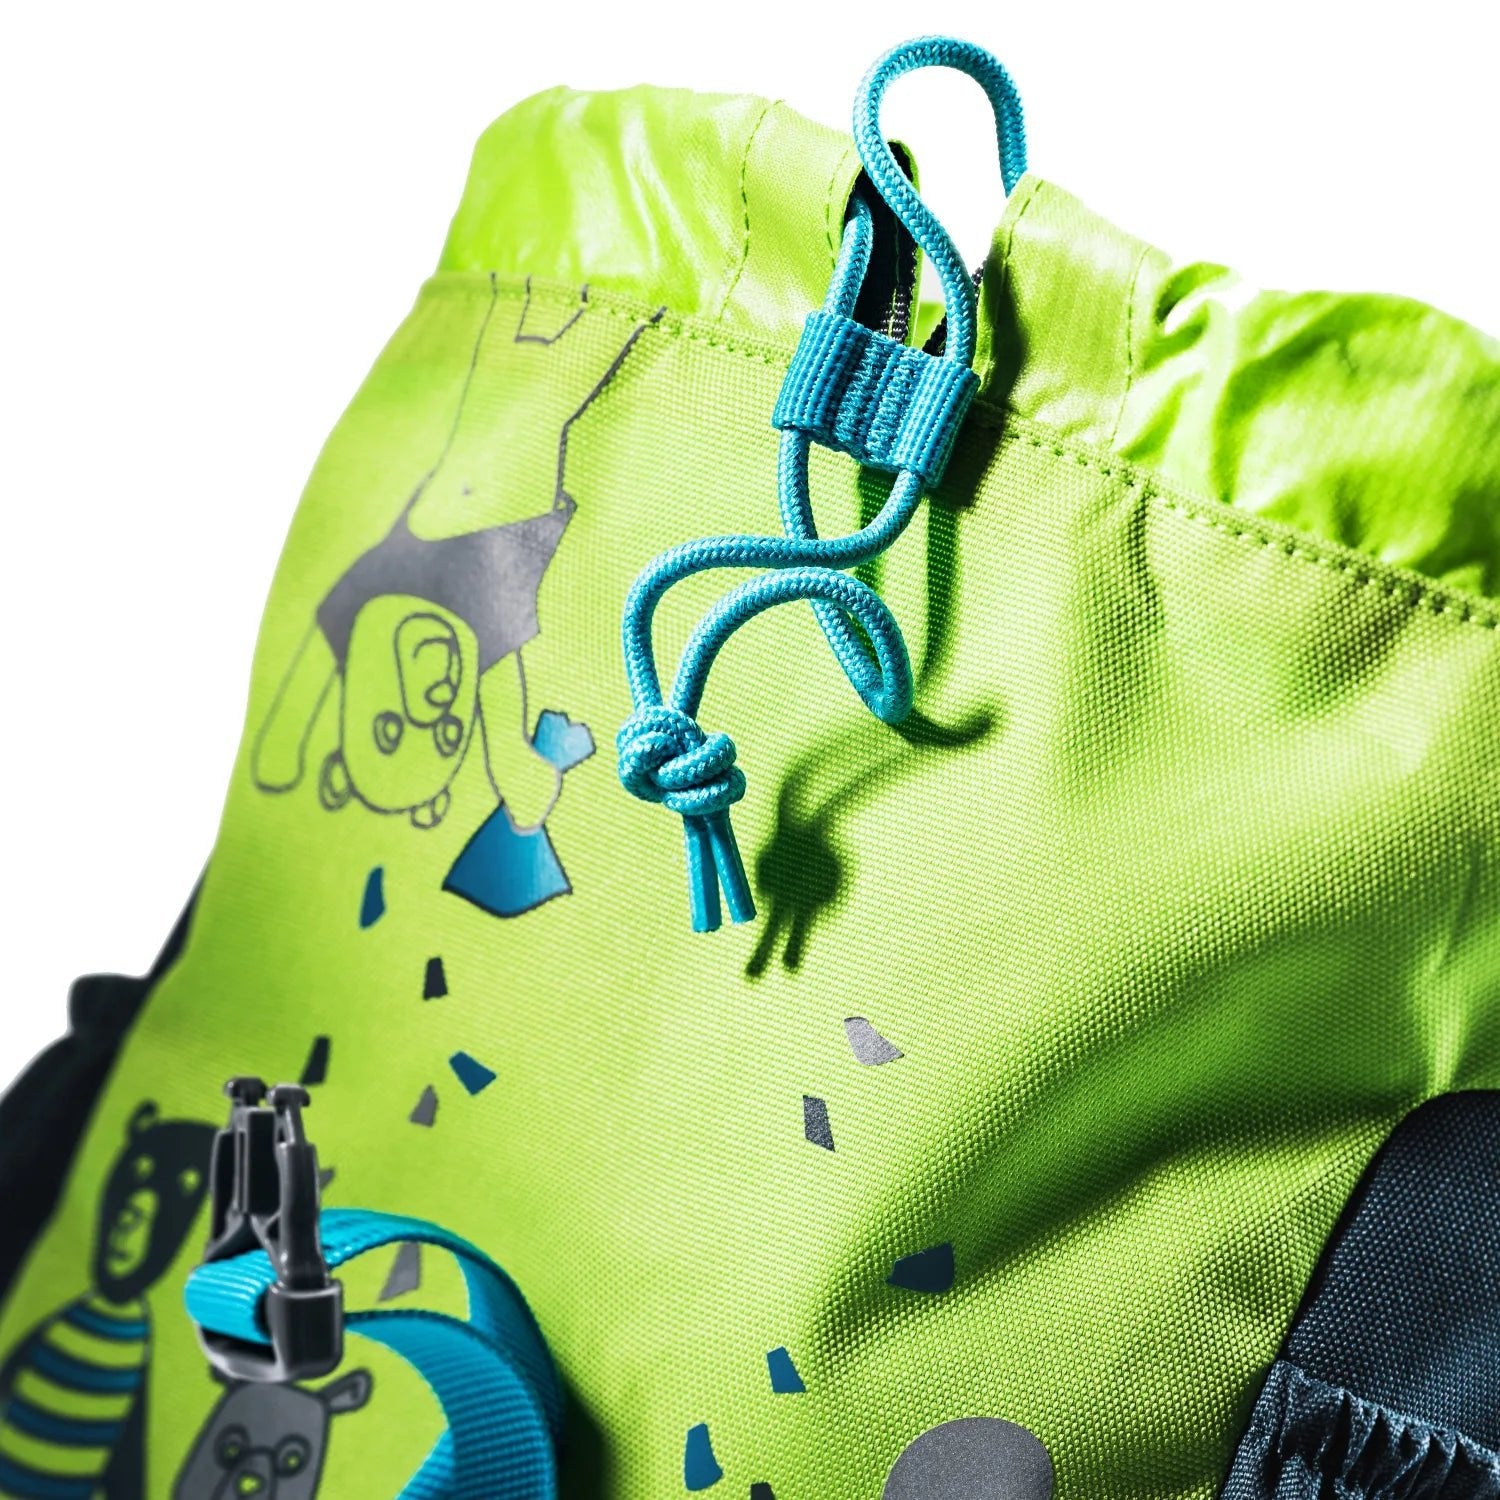 Deuter Daypack Schmusebär sac à dos enfant 33 cm - Dustblue-Alpinegreen